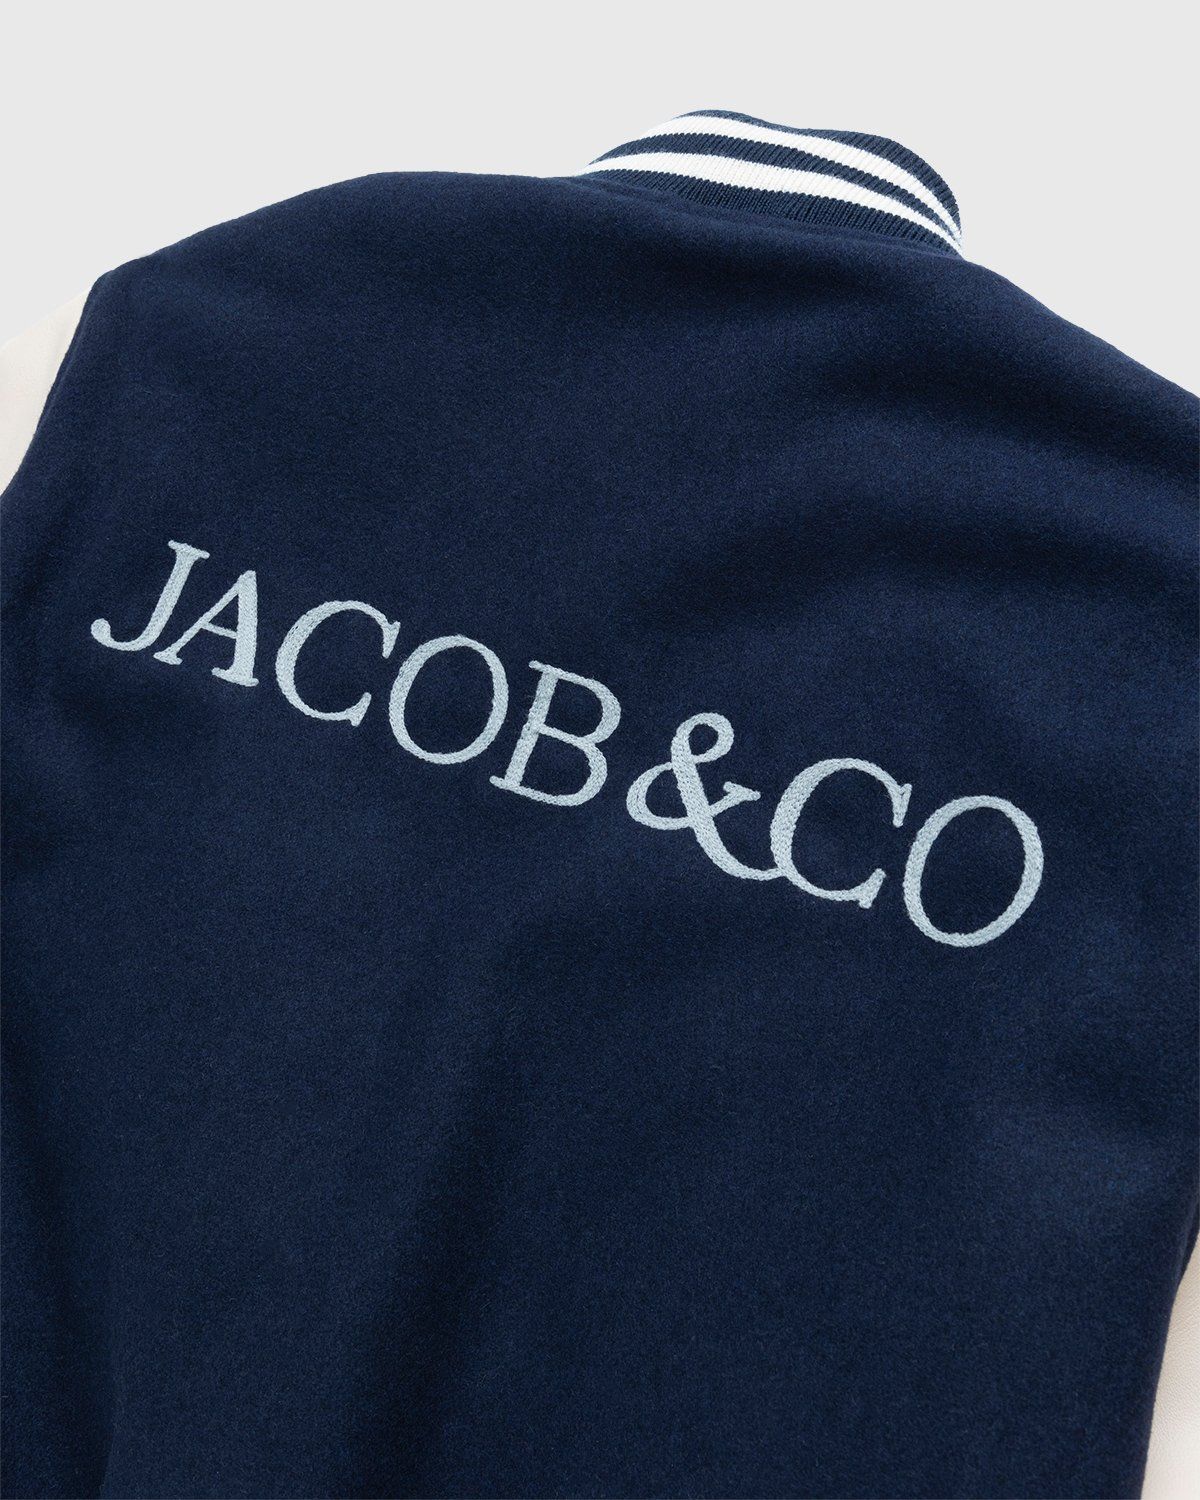 Jacob & Co. x Highsnobiety – Logo Varsity Jacket Navy Creme - Image 6